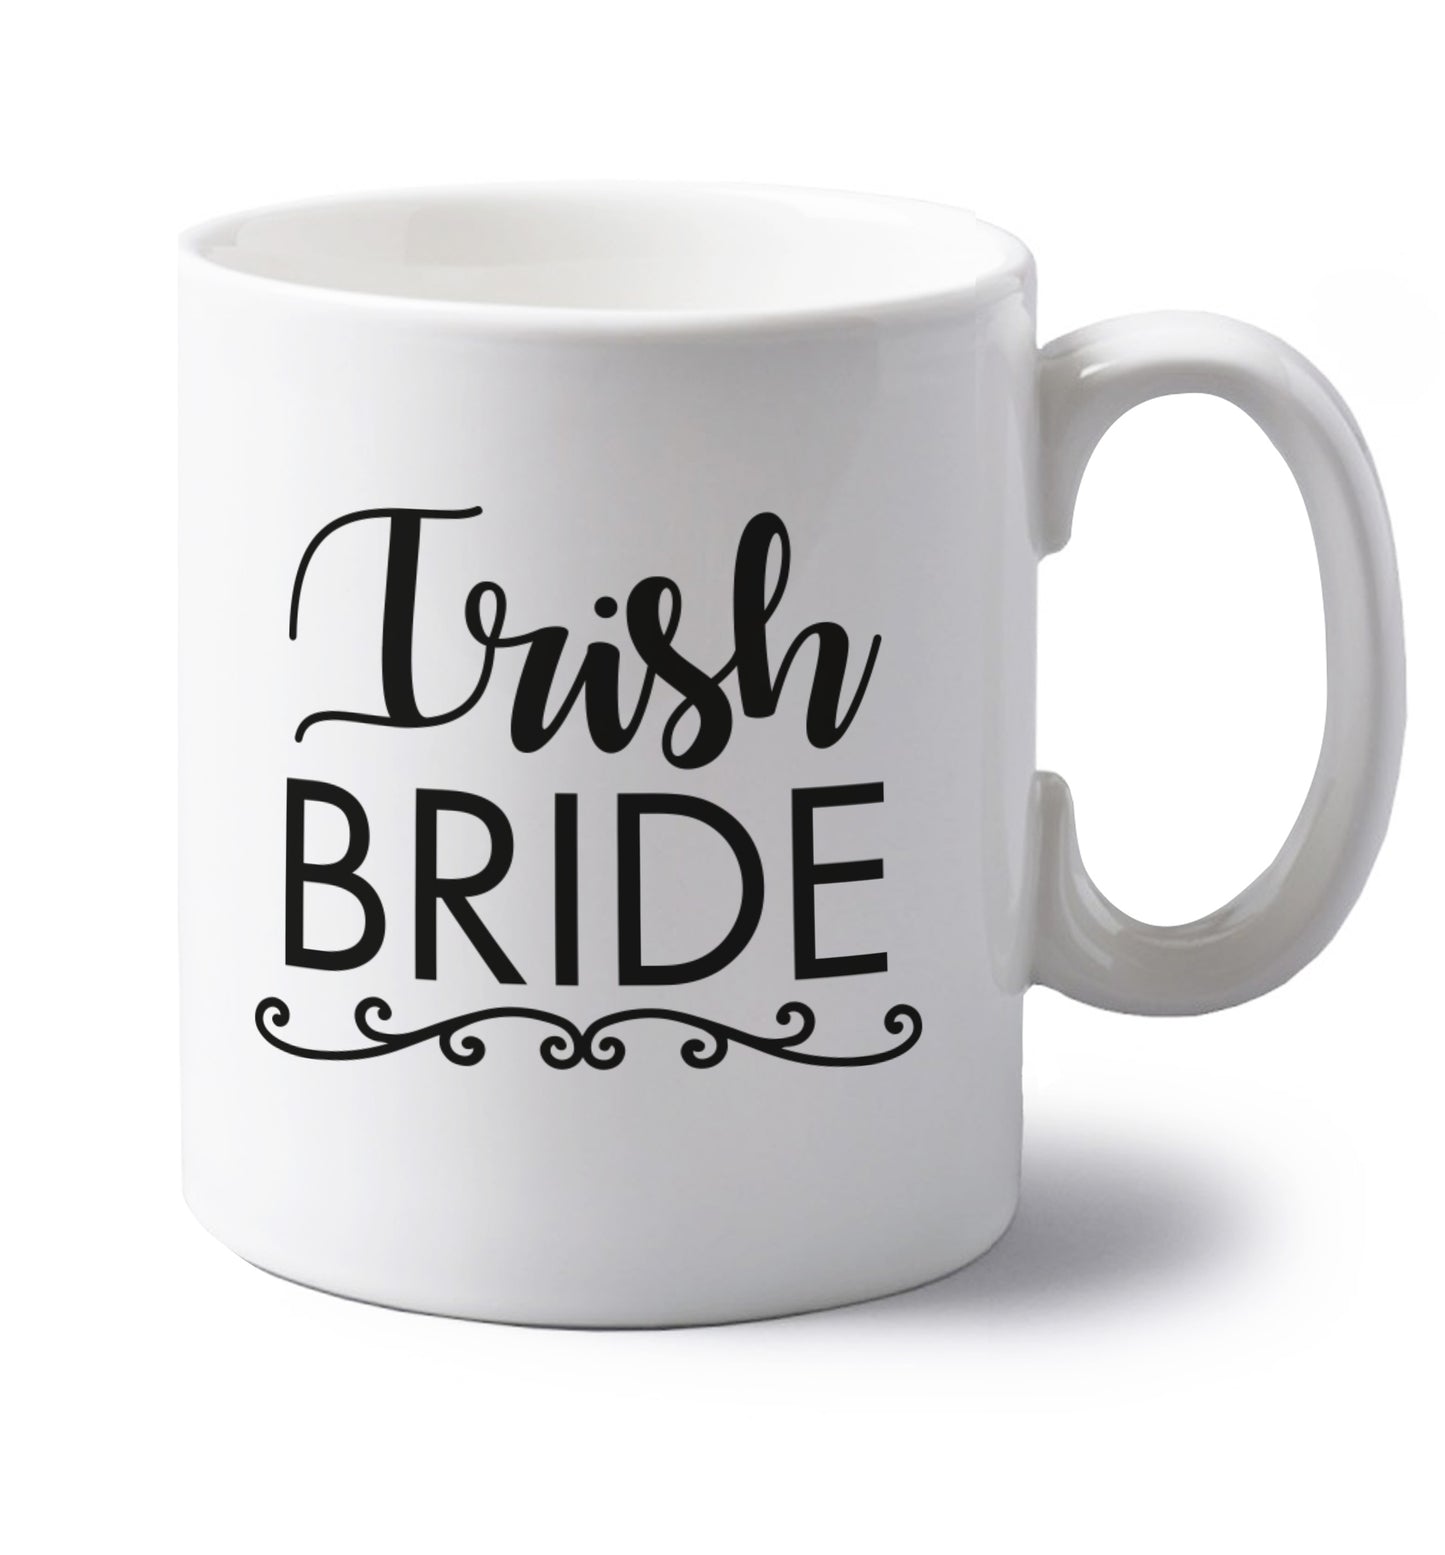 Irish bride left handed white ceramic mug 